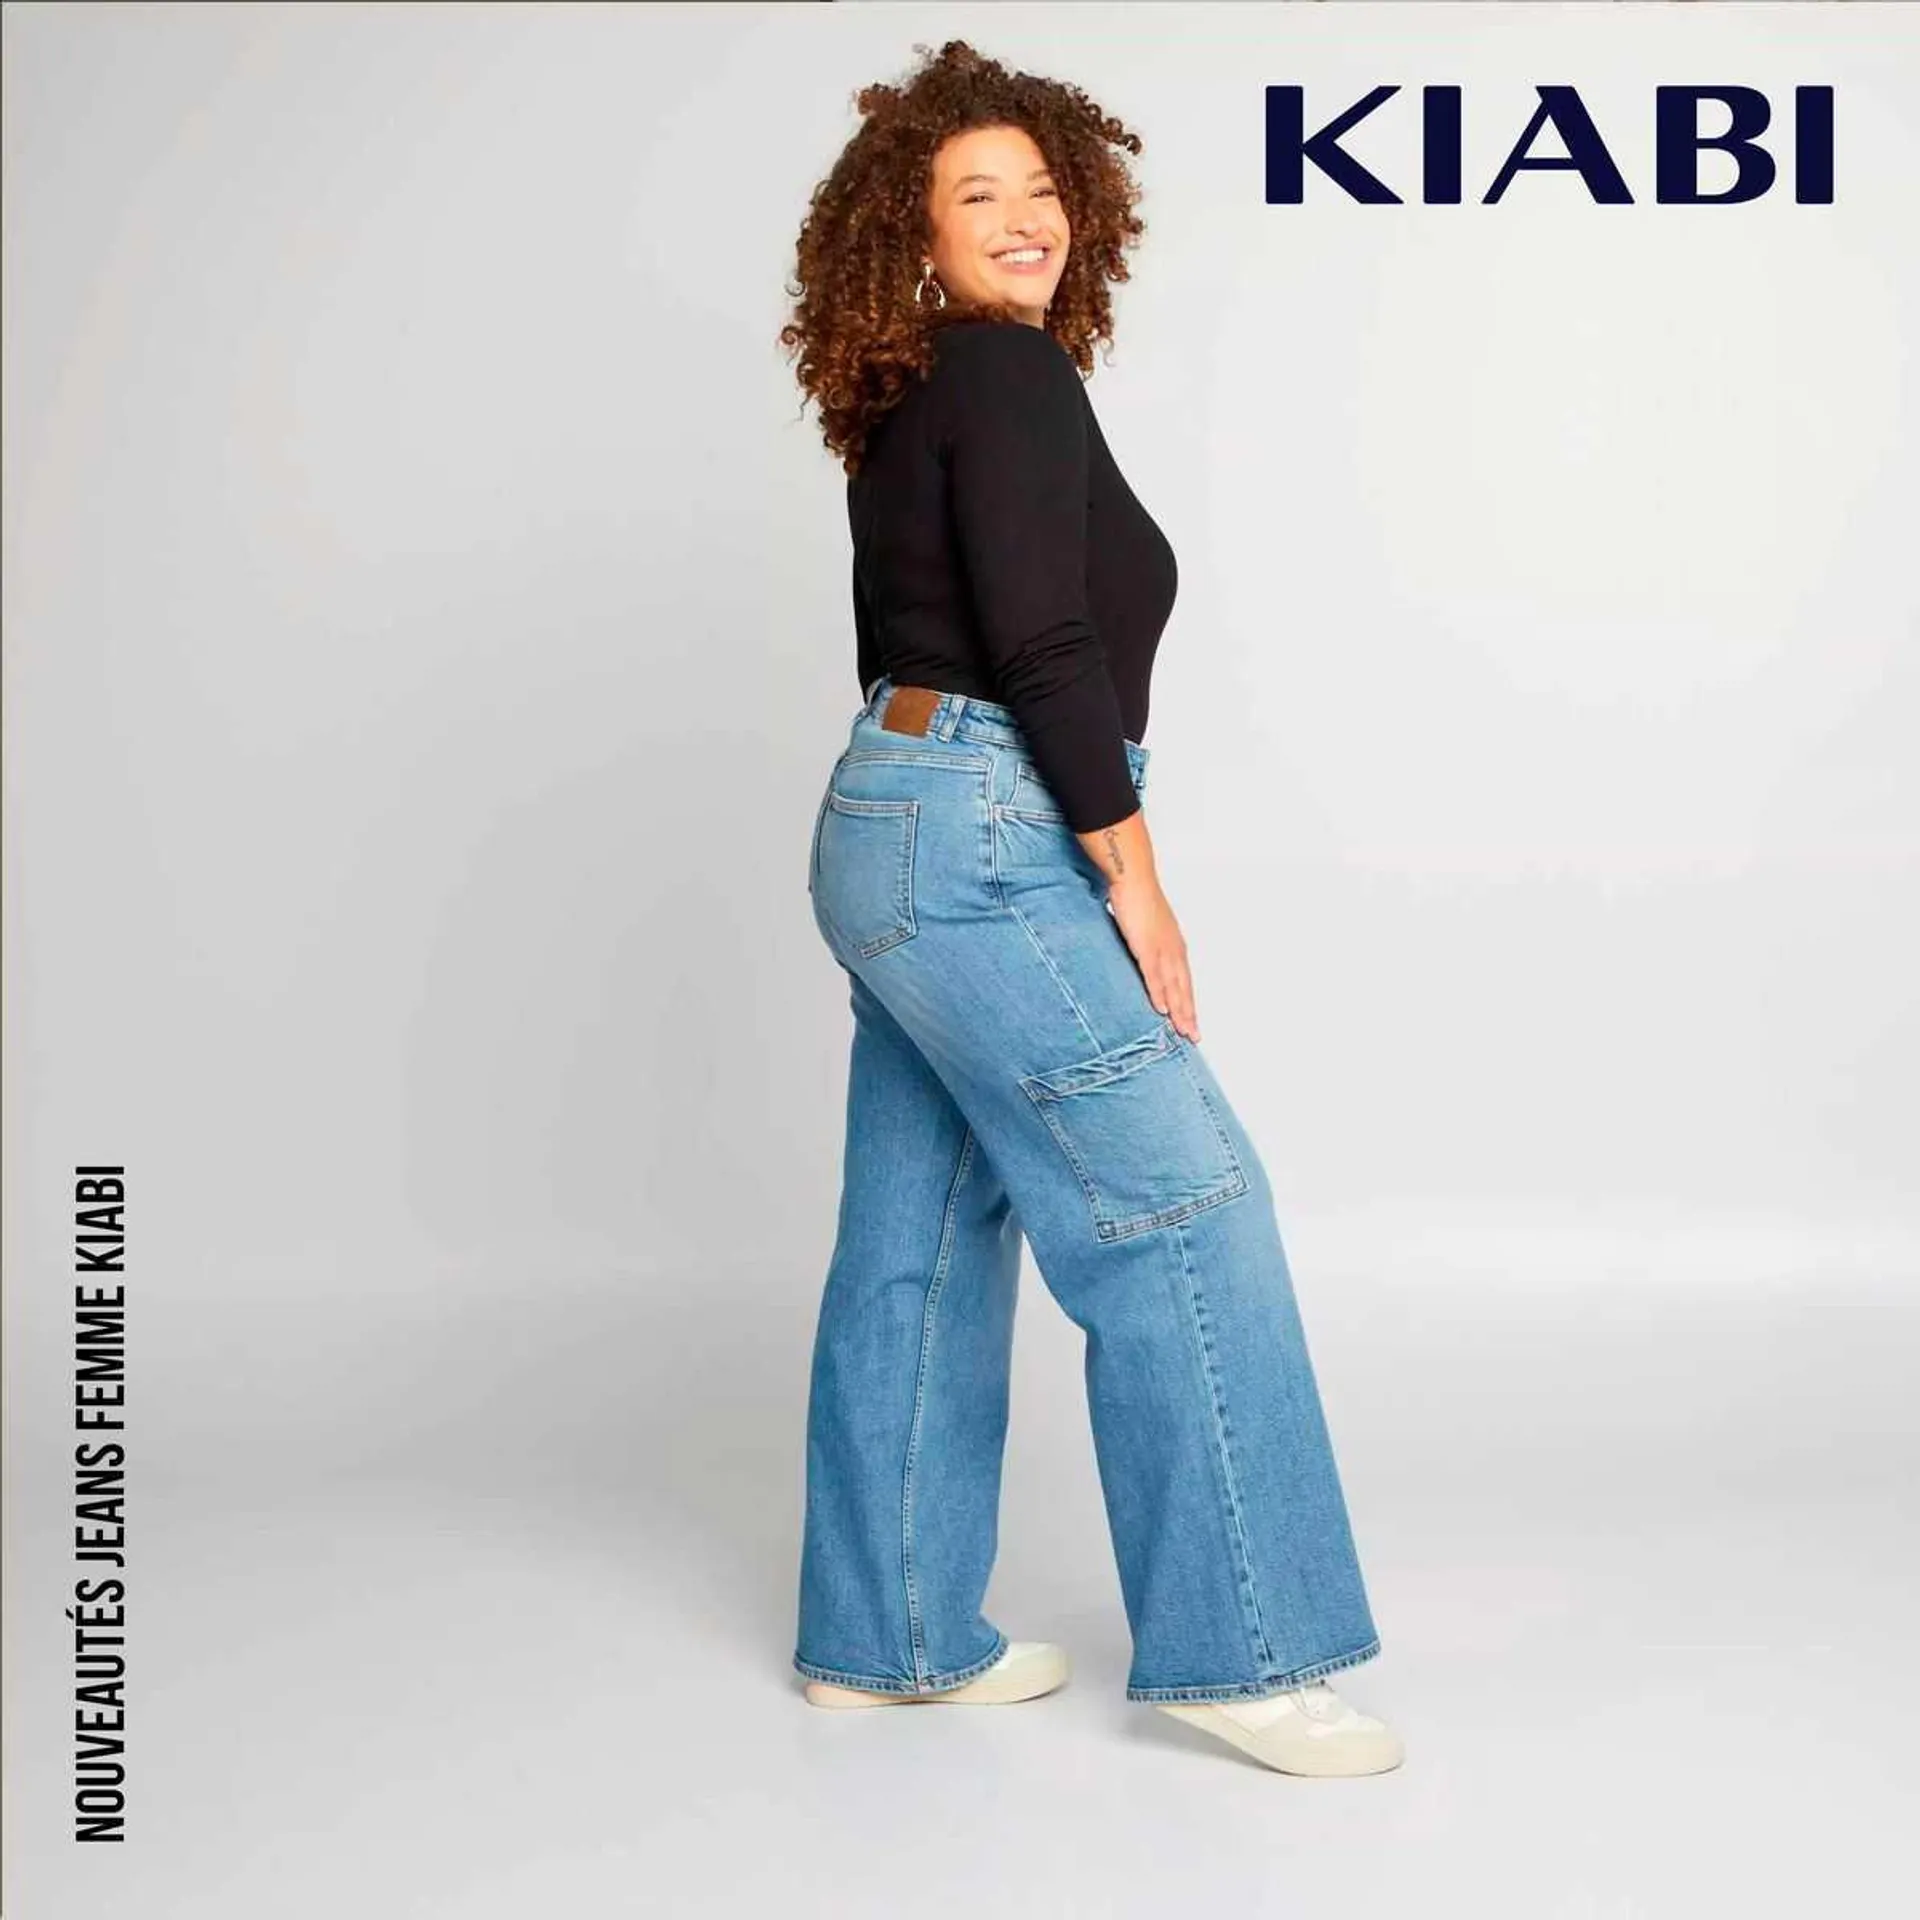 Kiabi Folder - 1